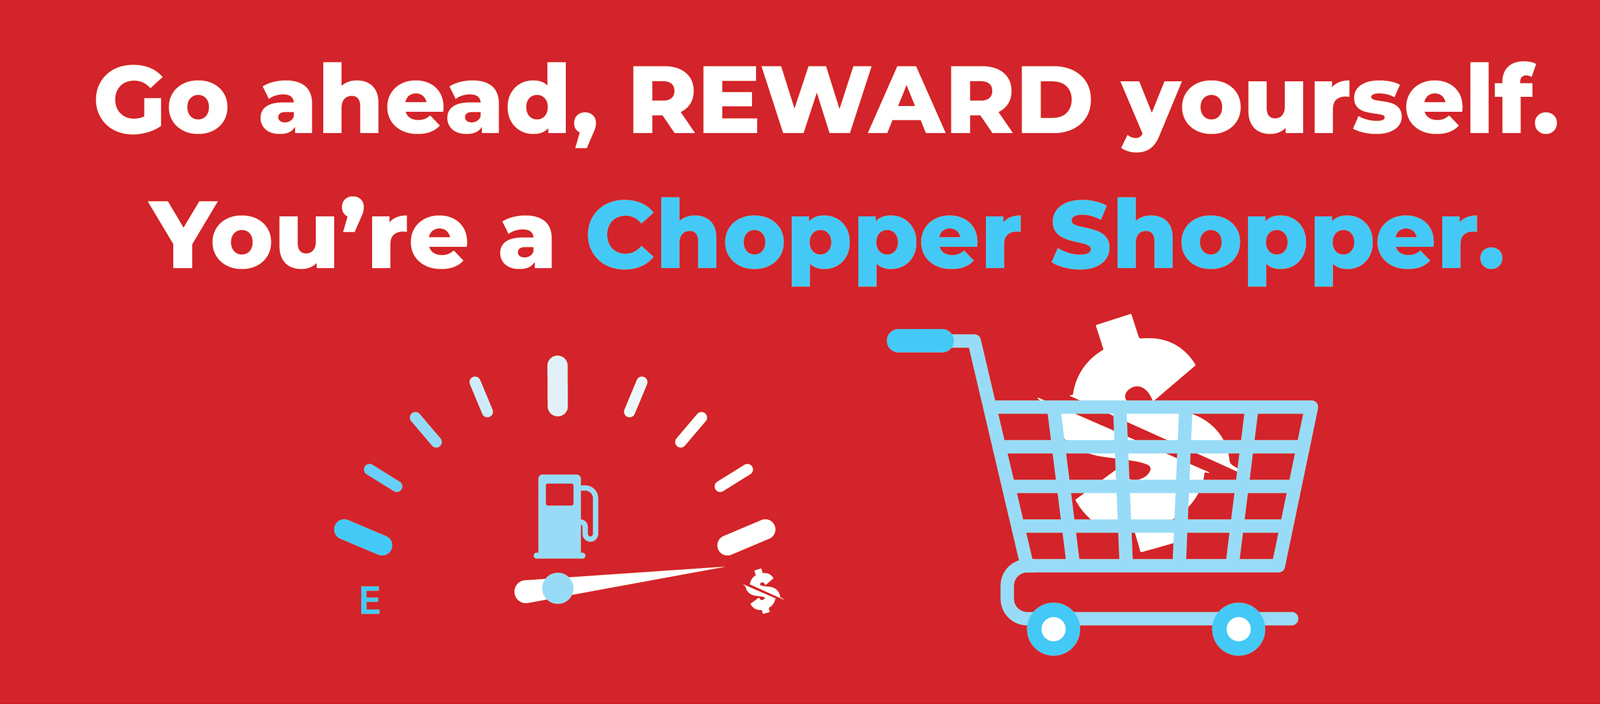 Go ahead REWARD yourself. You're a Chopper Shopper